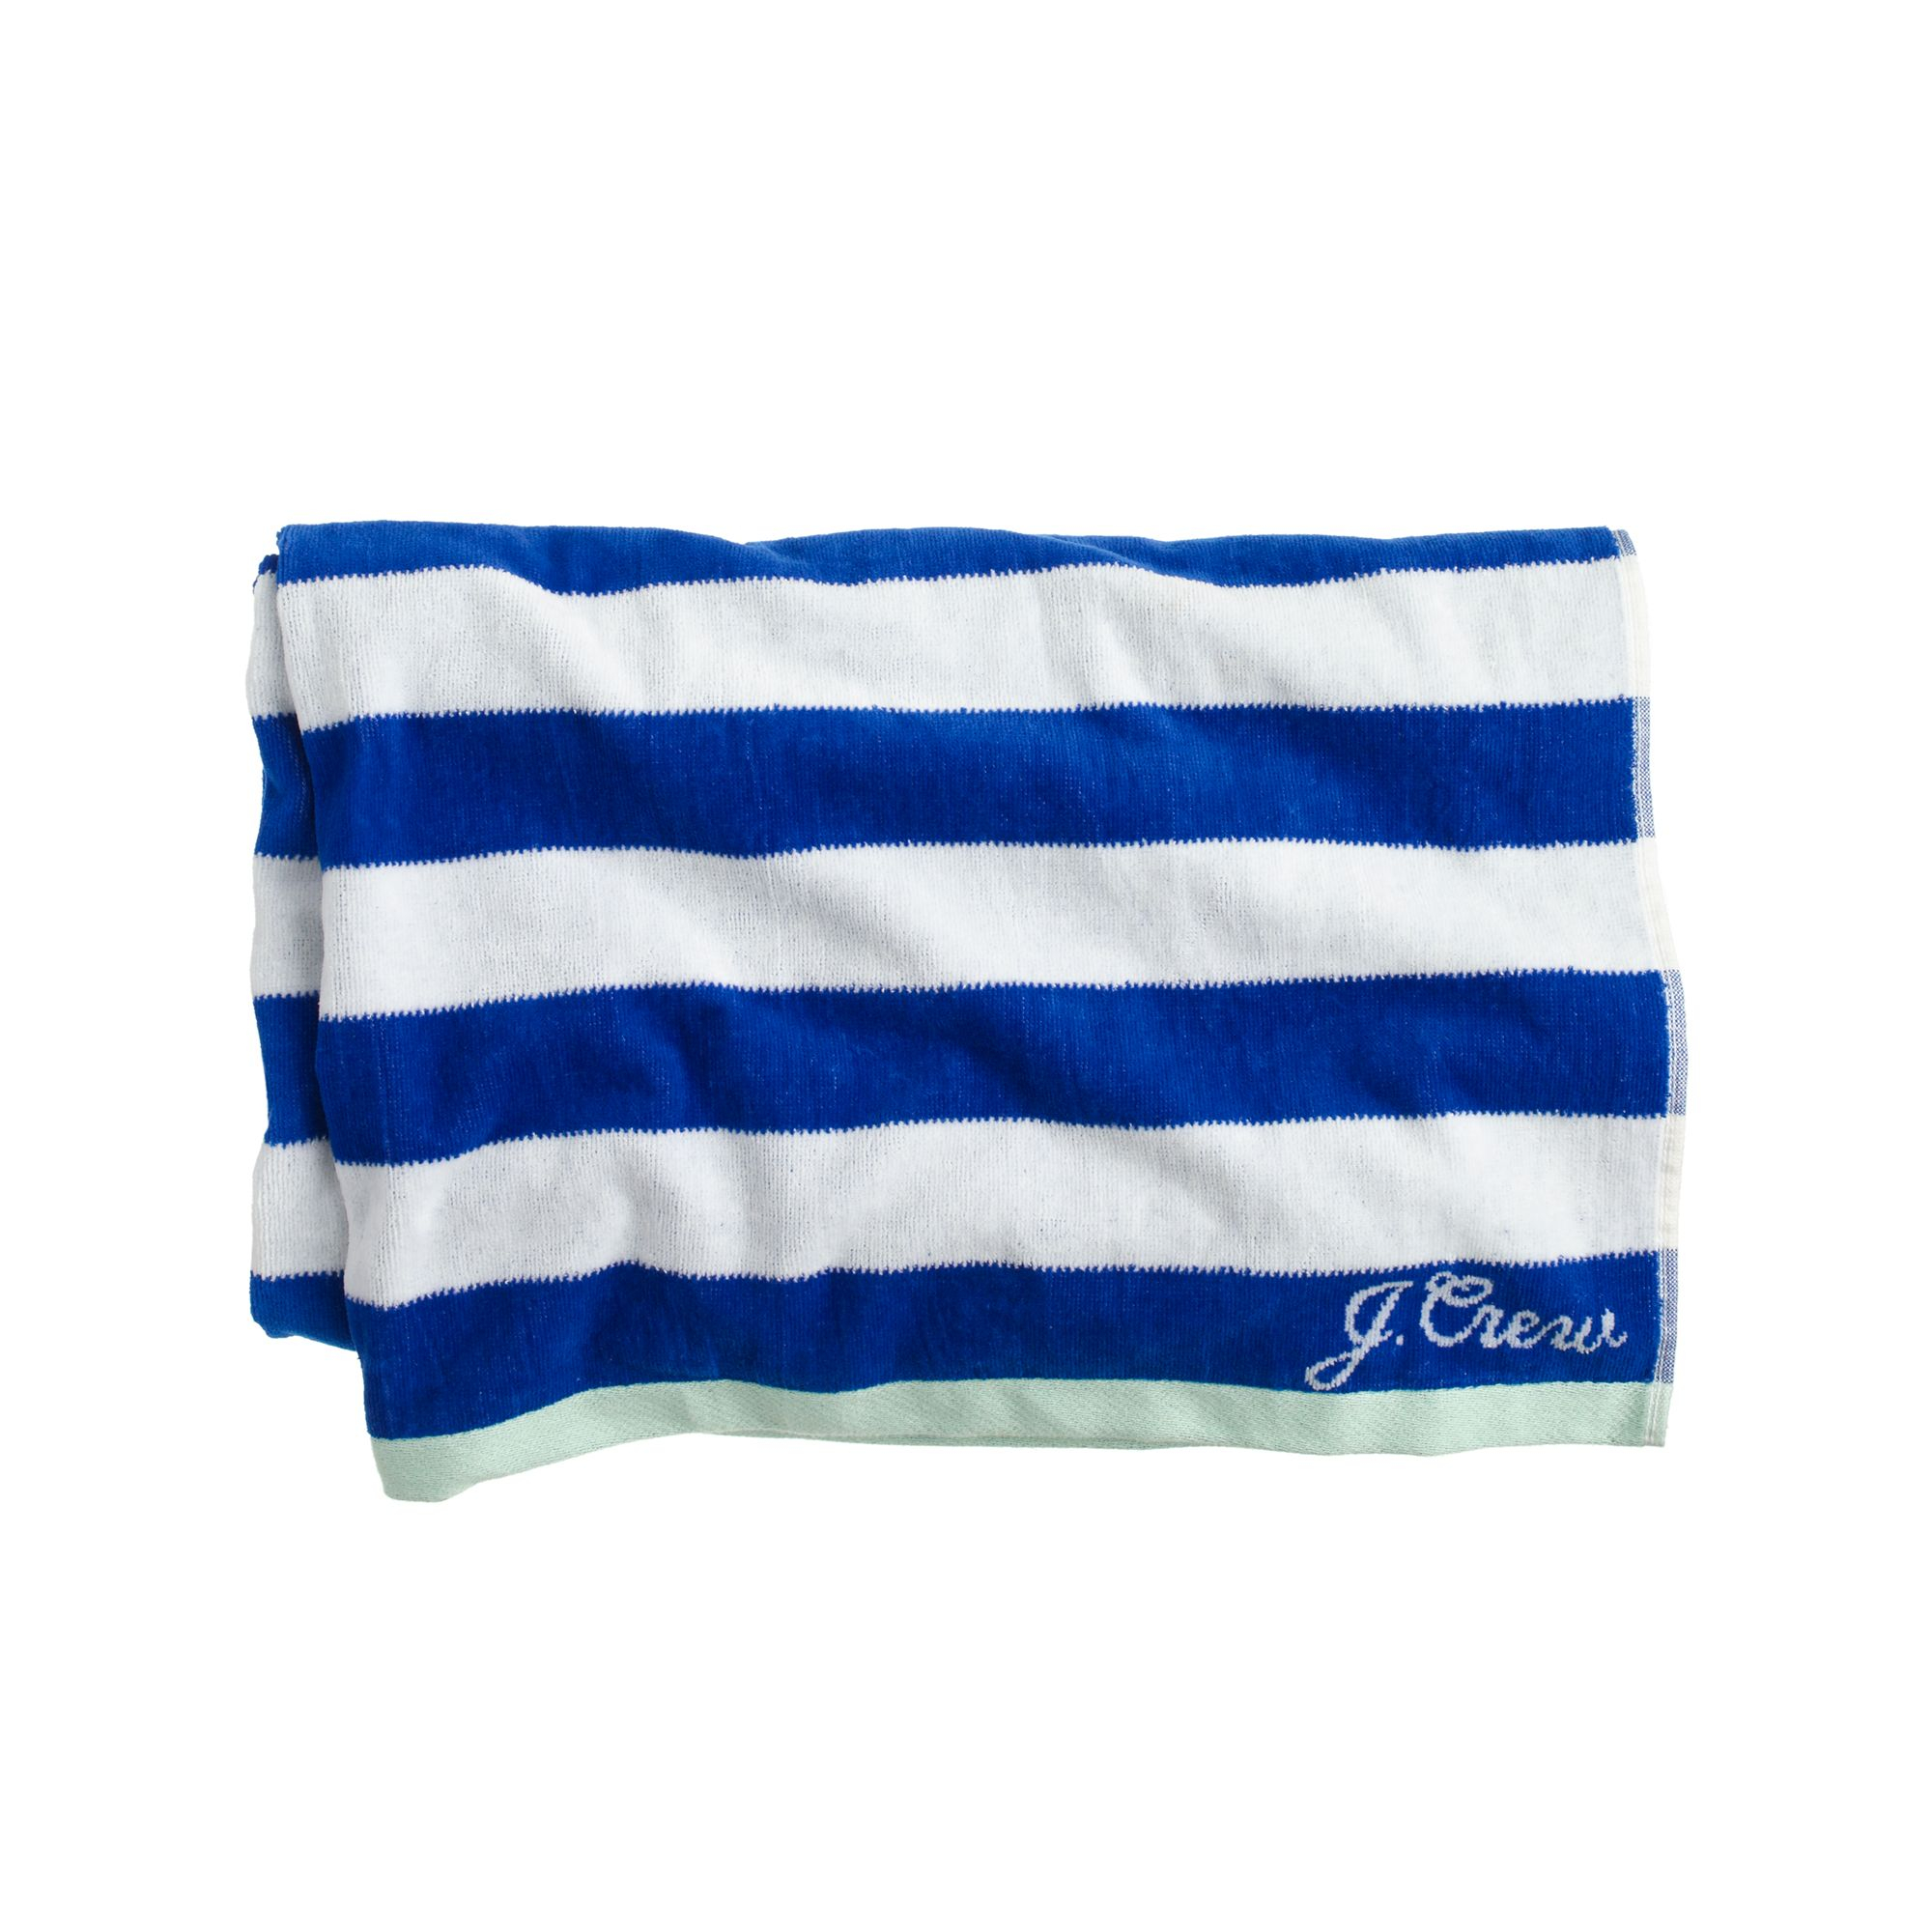 J.crew Beach Towel in Blue | Lyst